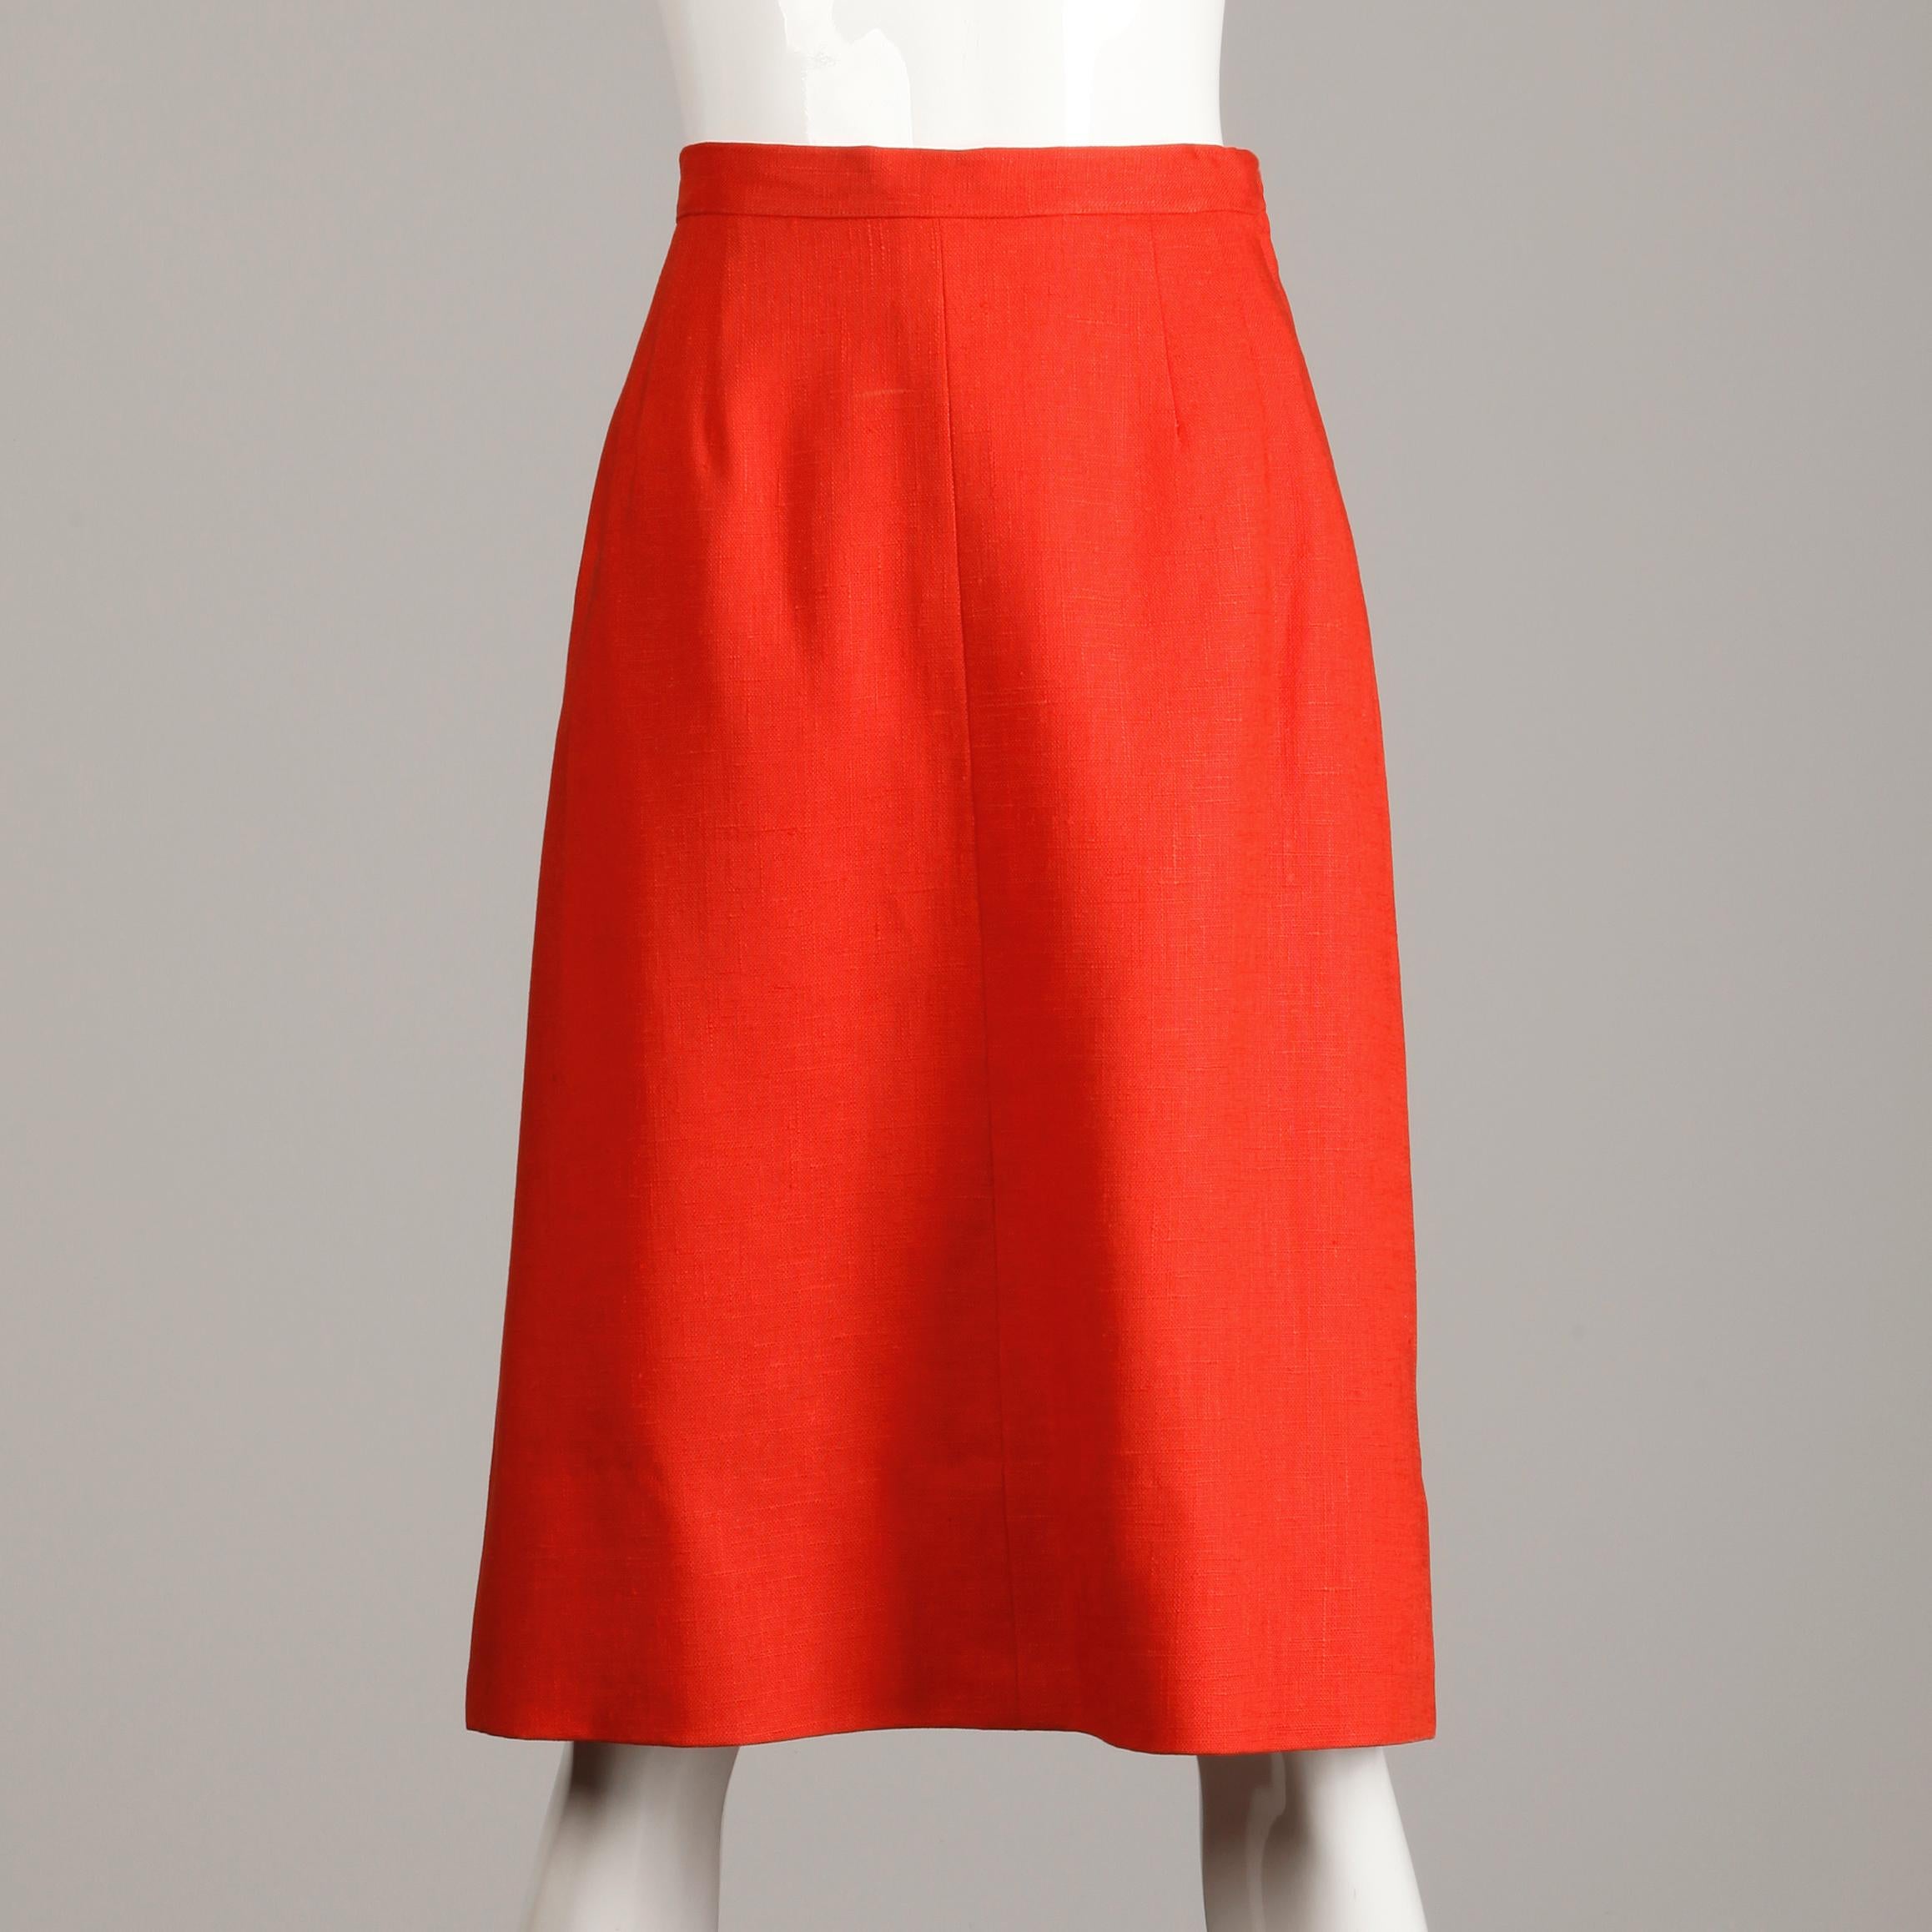 red woven skirt